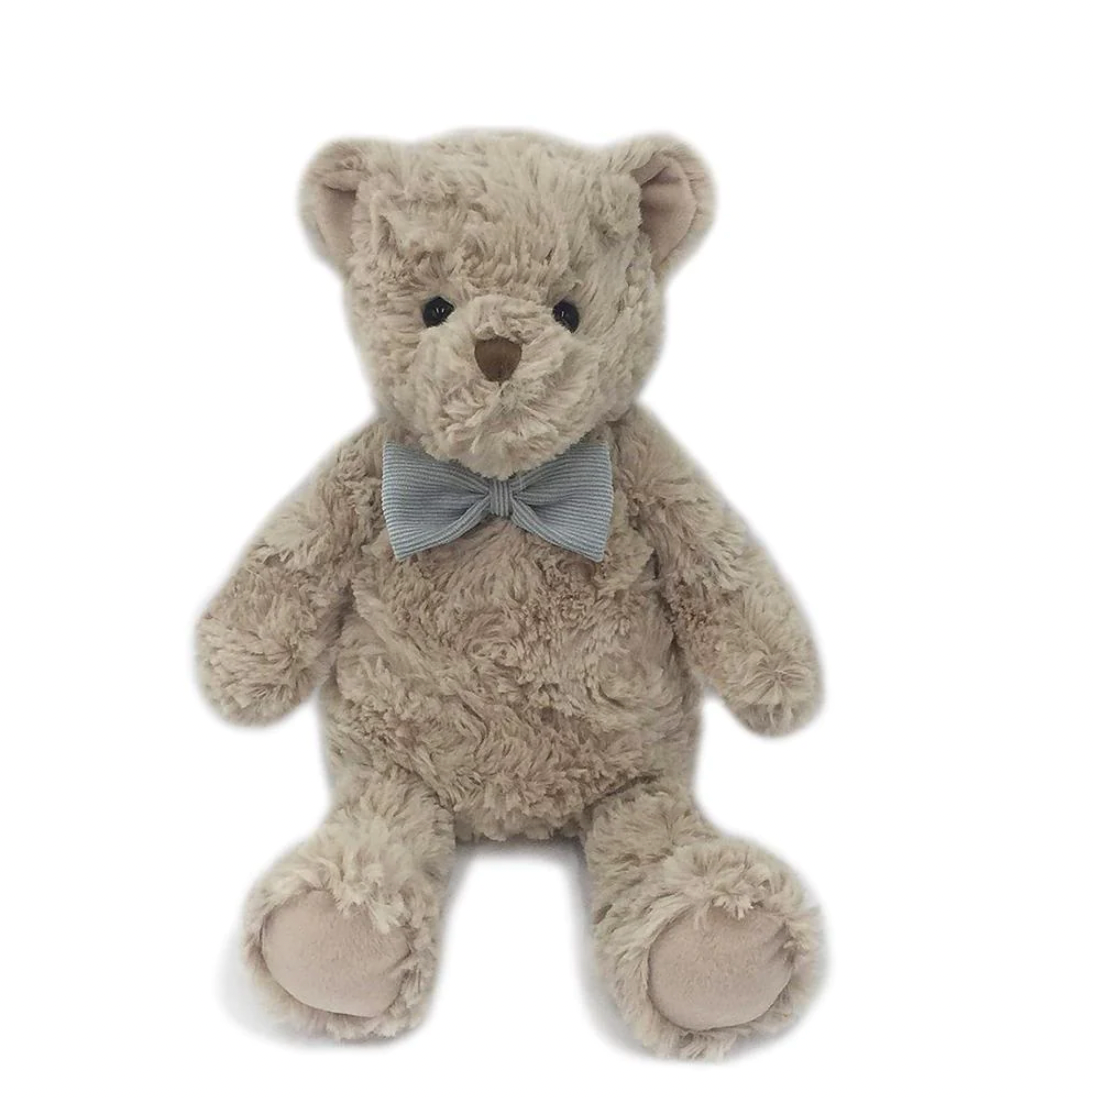 Baldwin the Teddy Bear